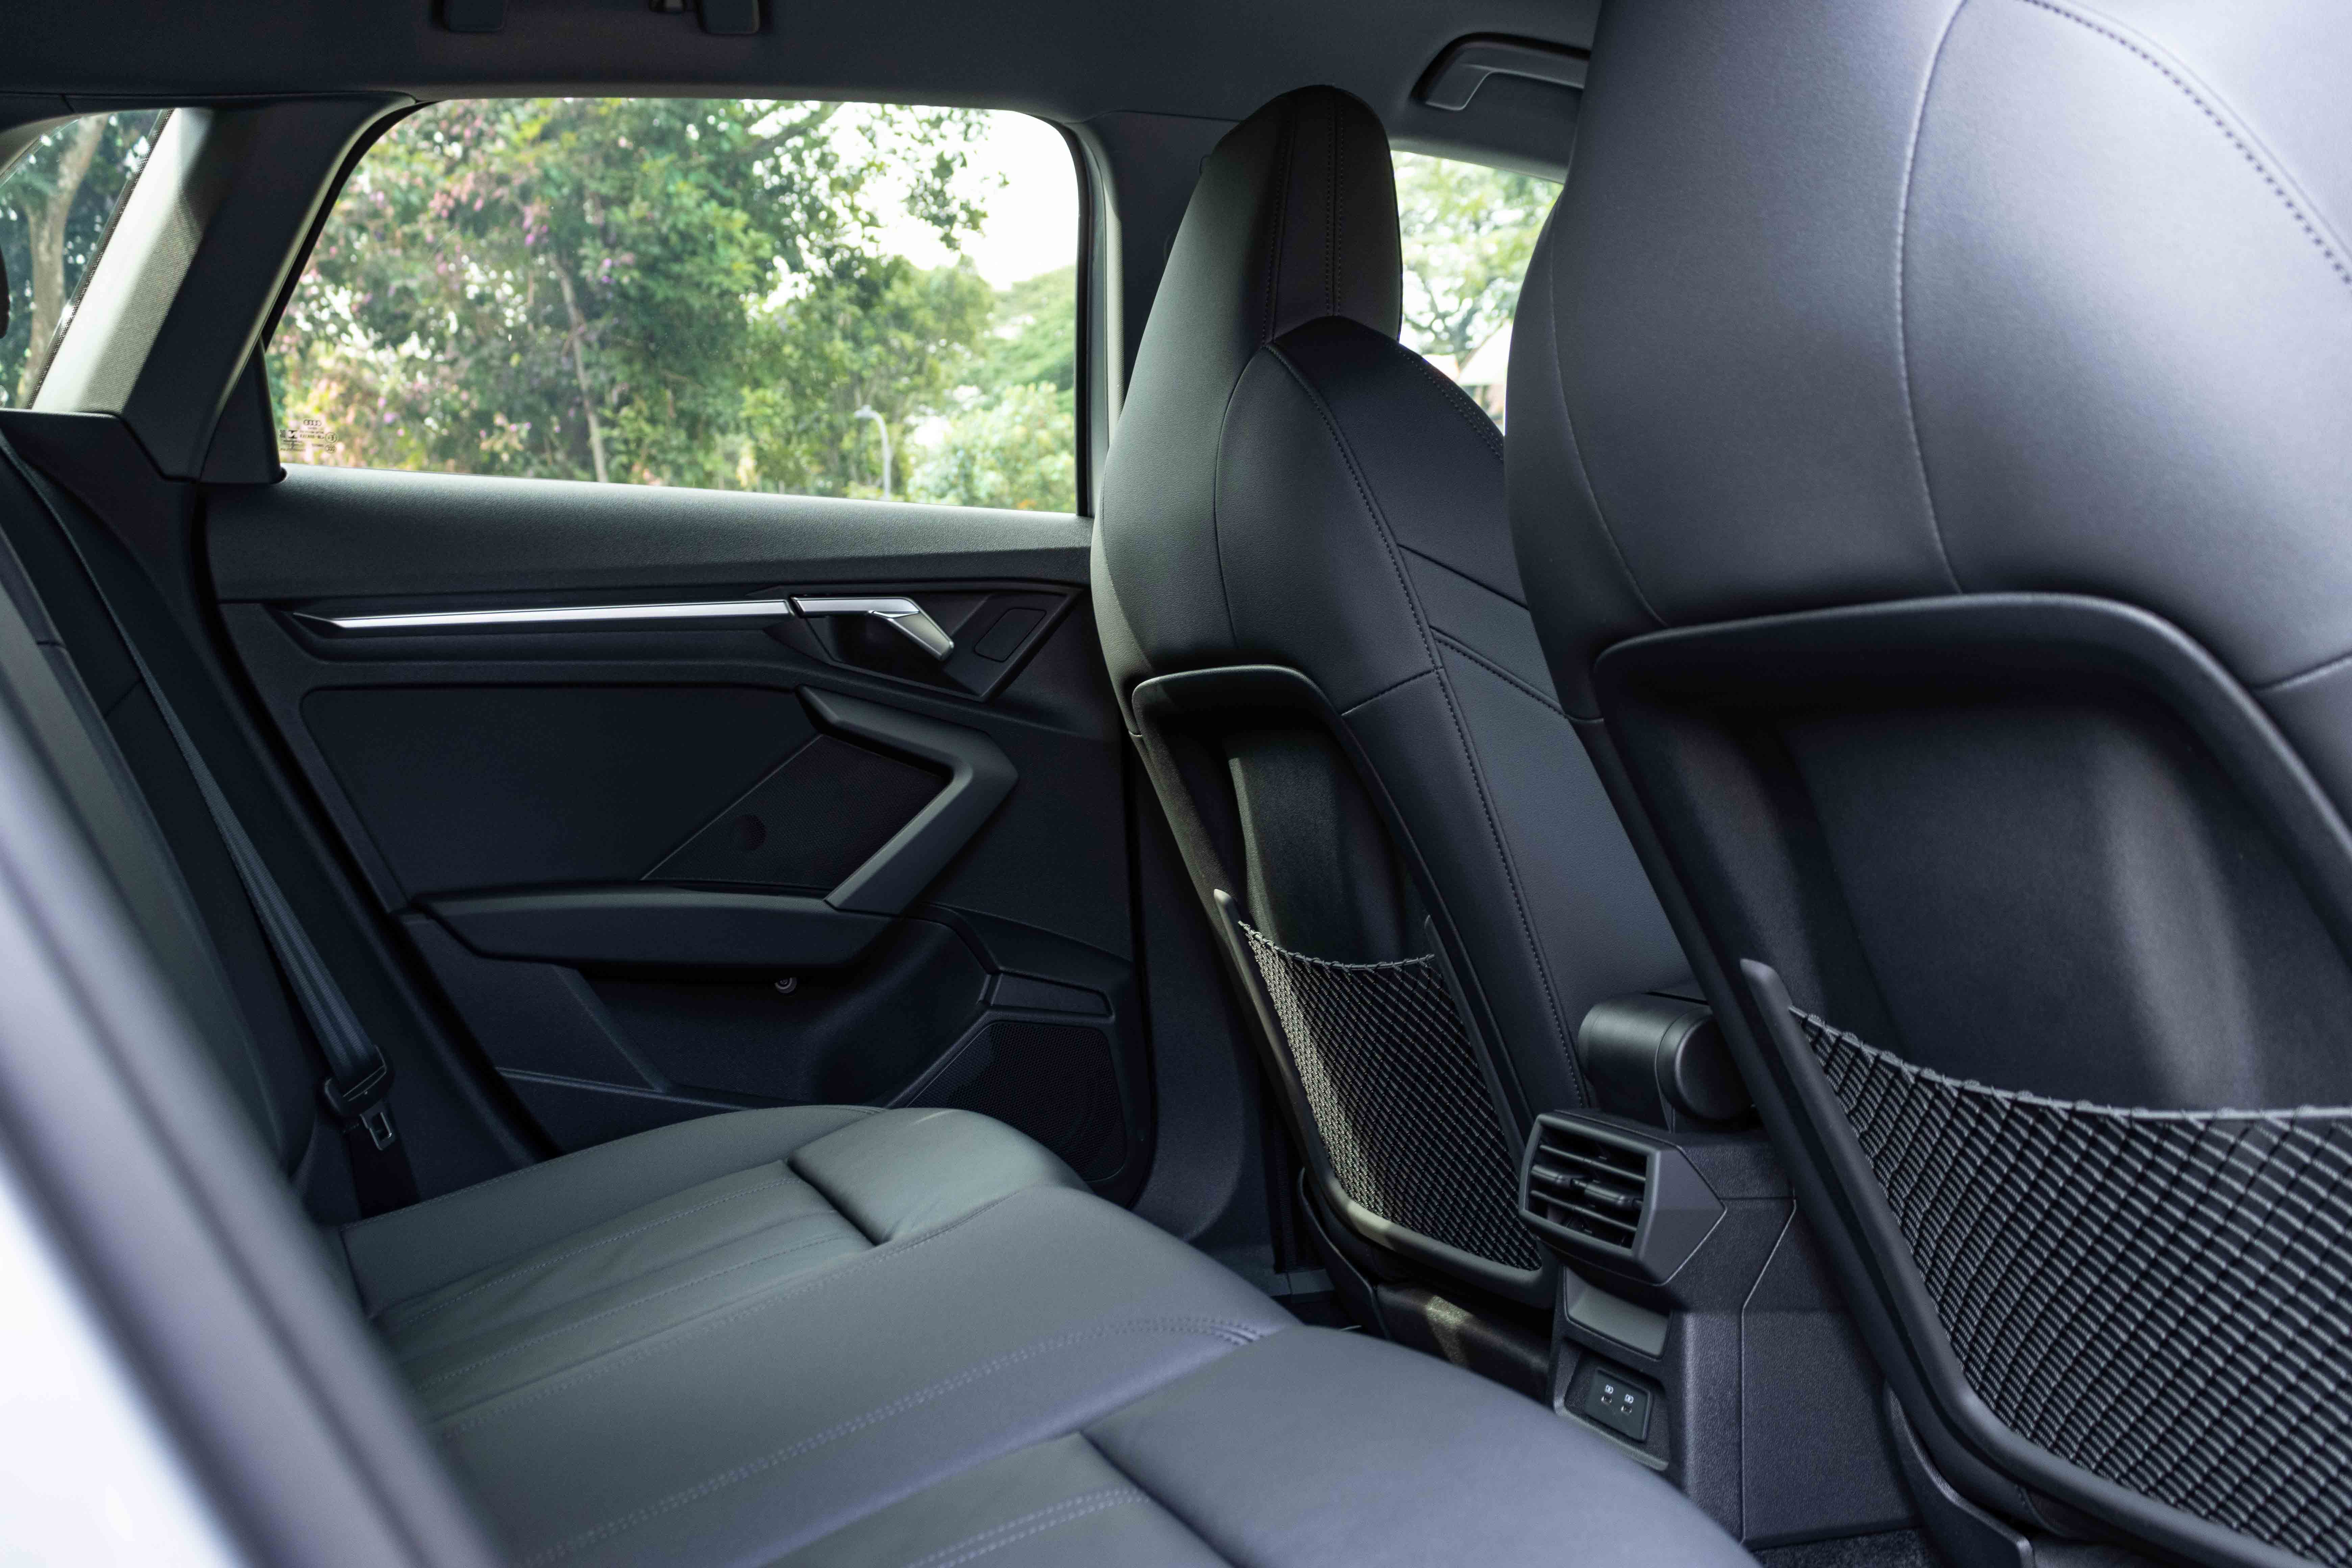 2022 Audi A3 Sportback 1.0 TFSI S tronic Singapore - rear seats